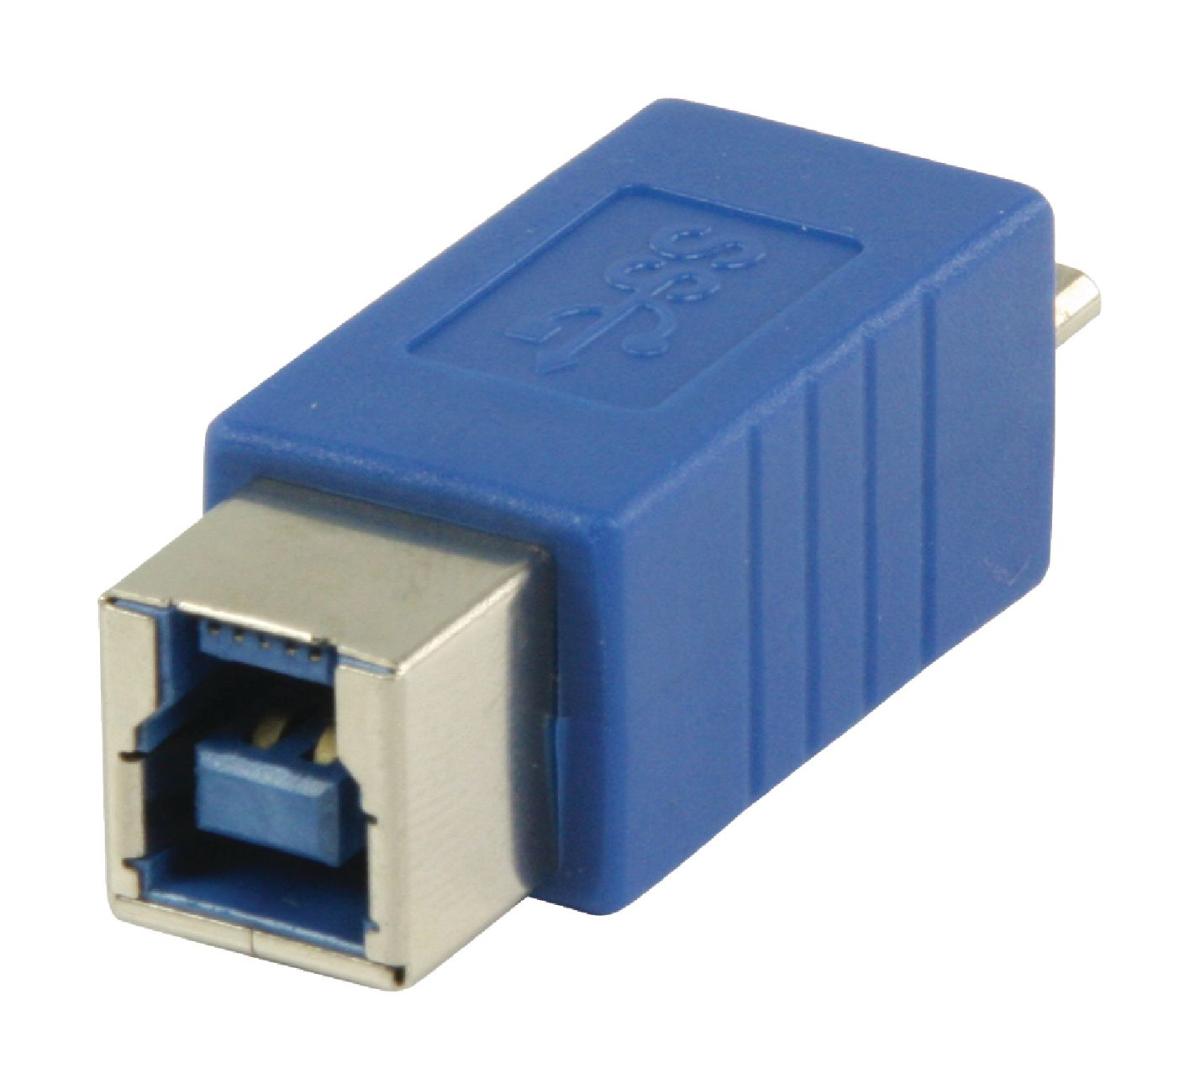 Micro-USB B 3.0